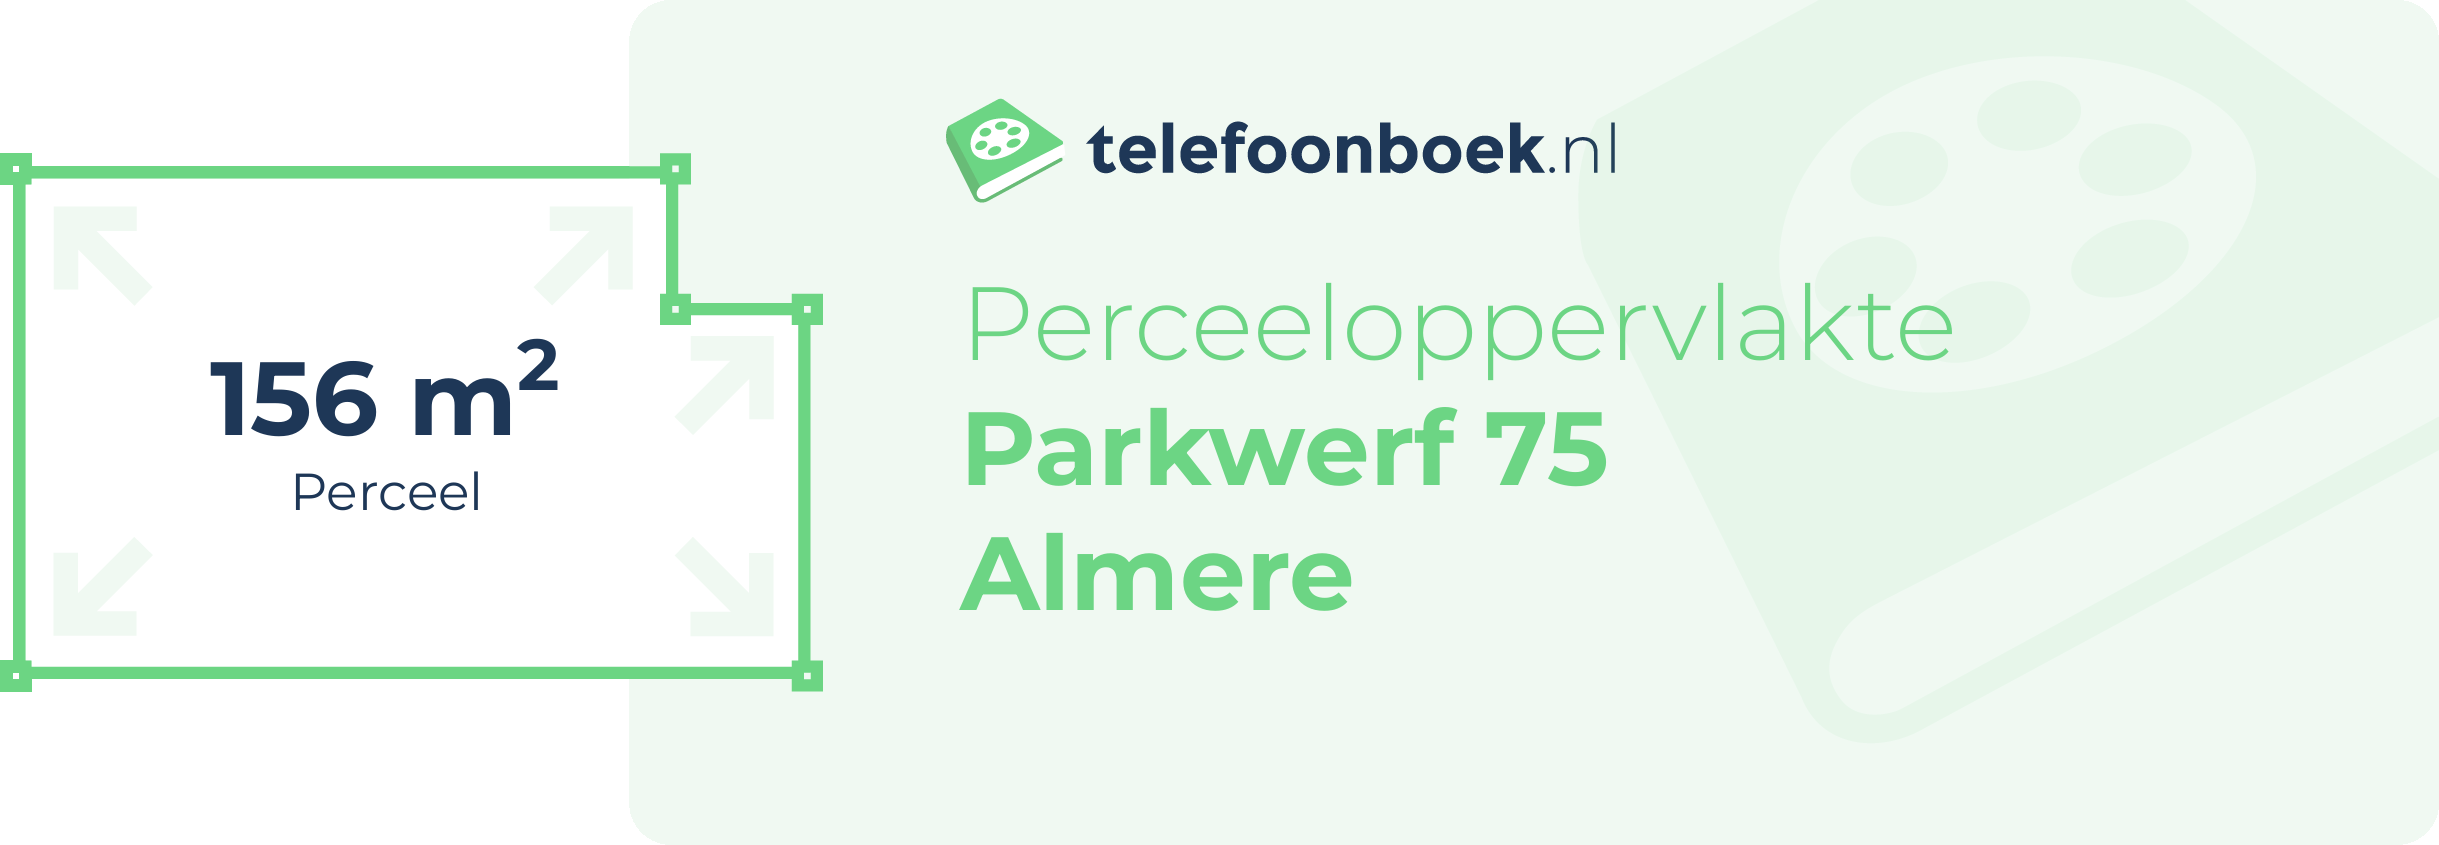 Perceeloppervlakte Parkwerf 75 Almere